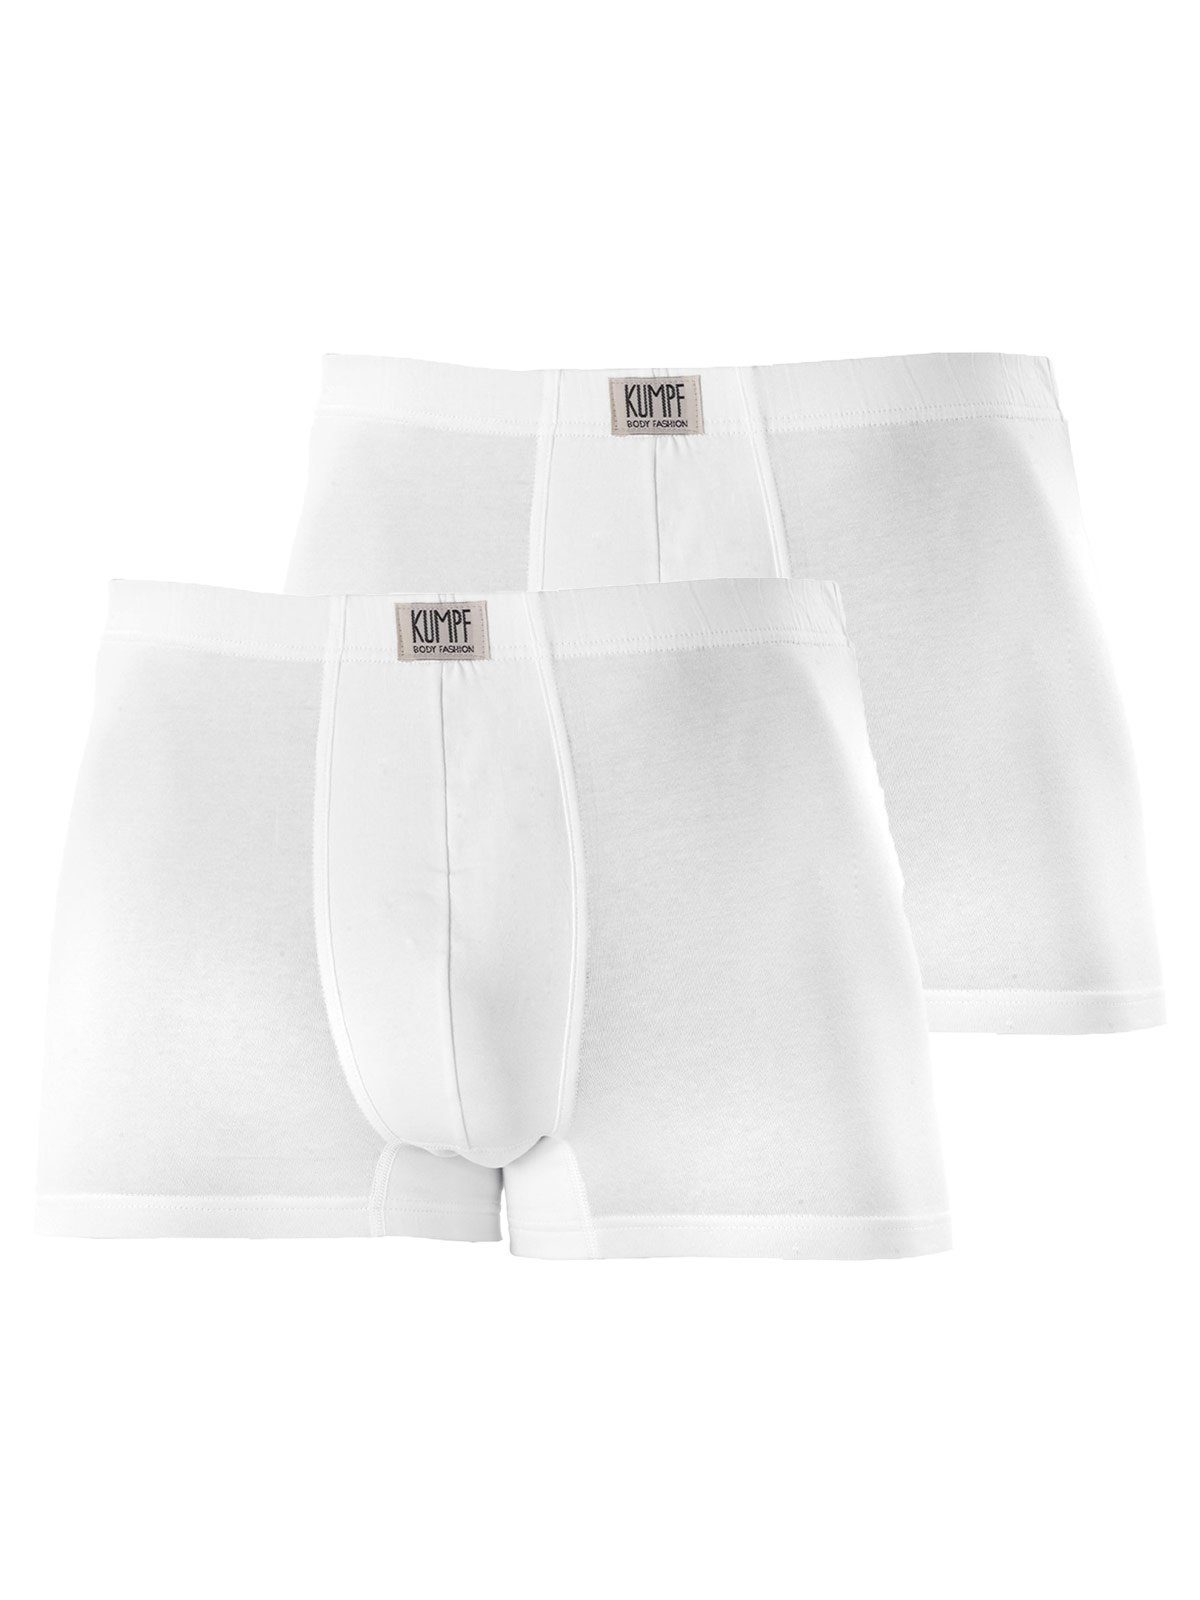 KUMPF Retro Pants 2er Sparpack Herren Pants Bio Cotton (Spar-Set, 2-St) hohe Markenqualität weiss